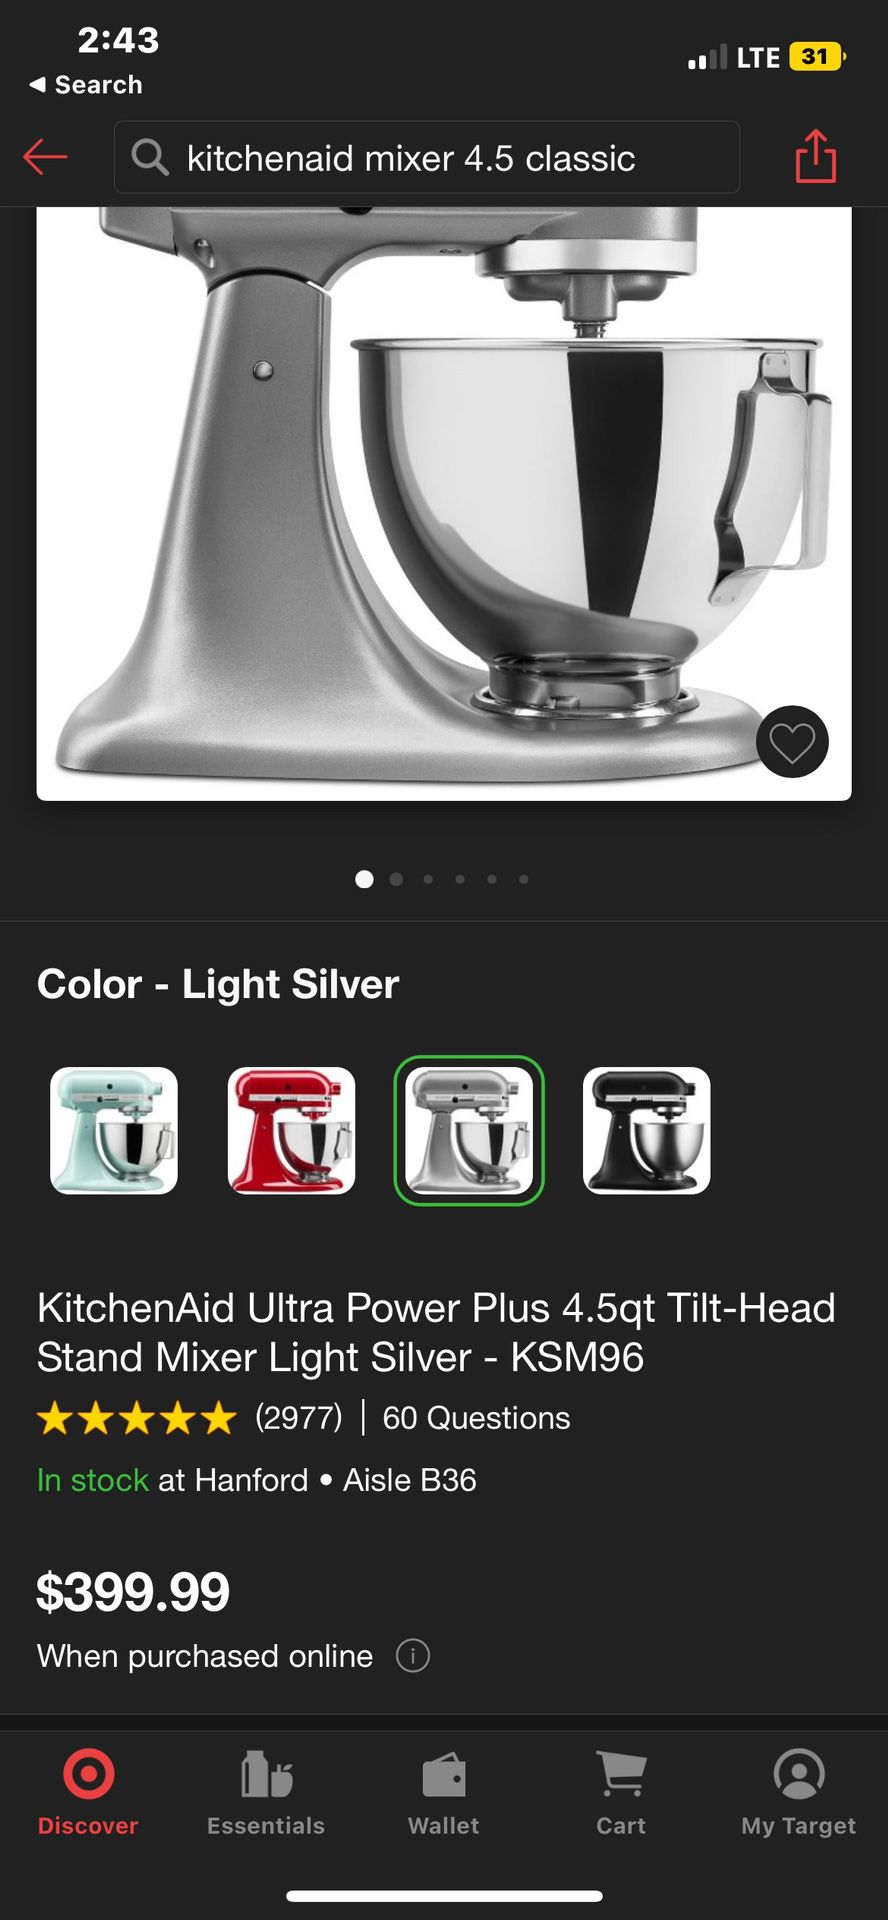 KitchenAid Ultra Power Plus 4.5qt Tilt-Head Stand Mixer Light Silver - KSM96